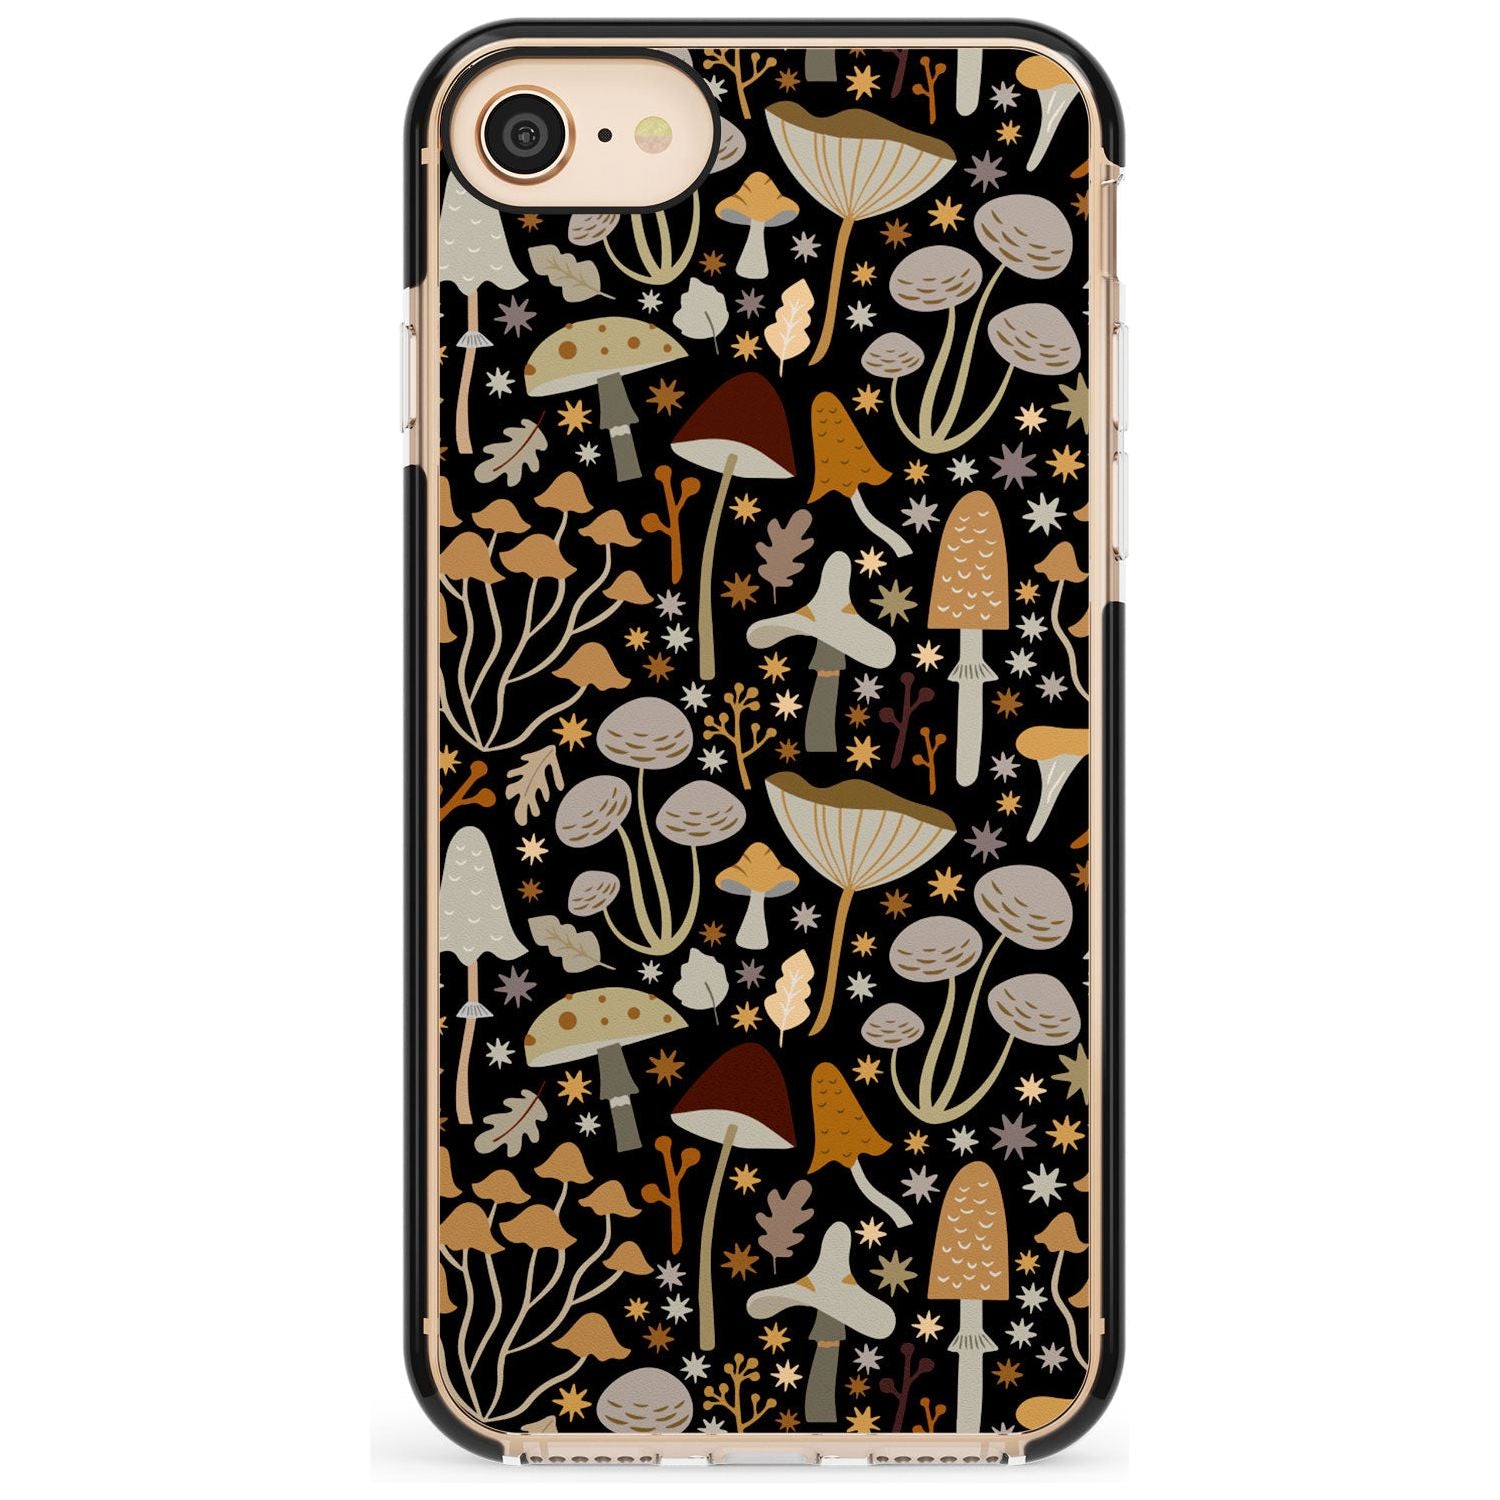 Sentimental Mushrooms Pattern Black Impact Phone Case for iPhone SE 8 7 Plus